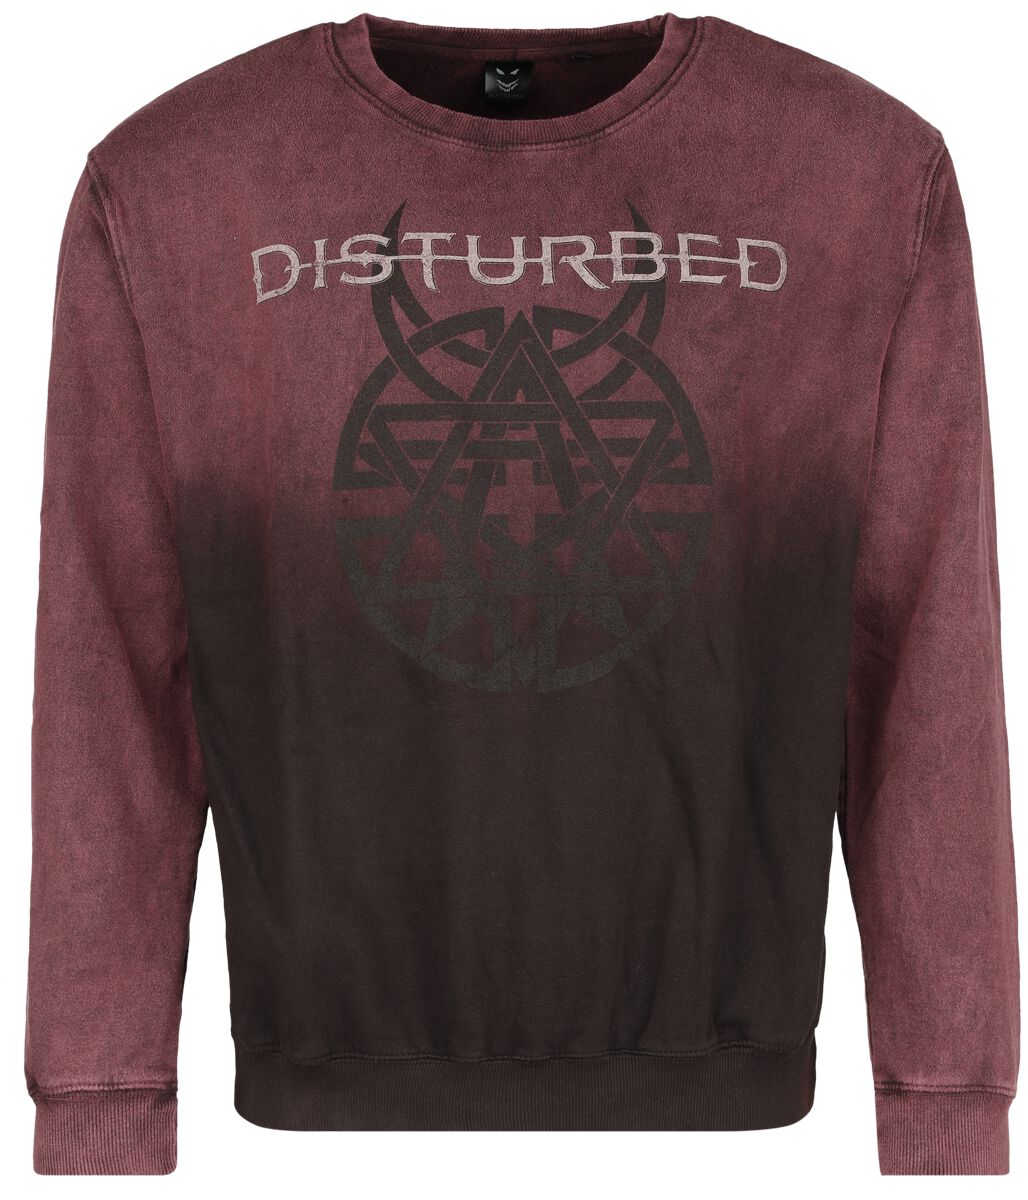 Disturbed Believe Symbol Sweatshirt dunkelrot in XL